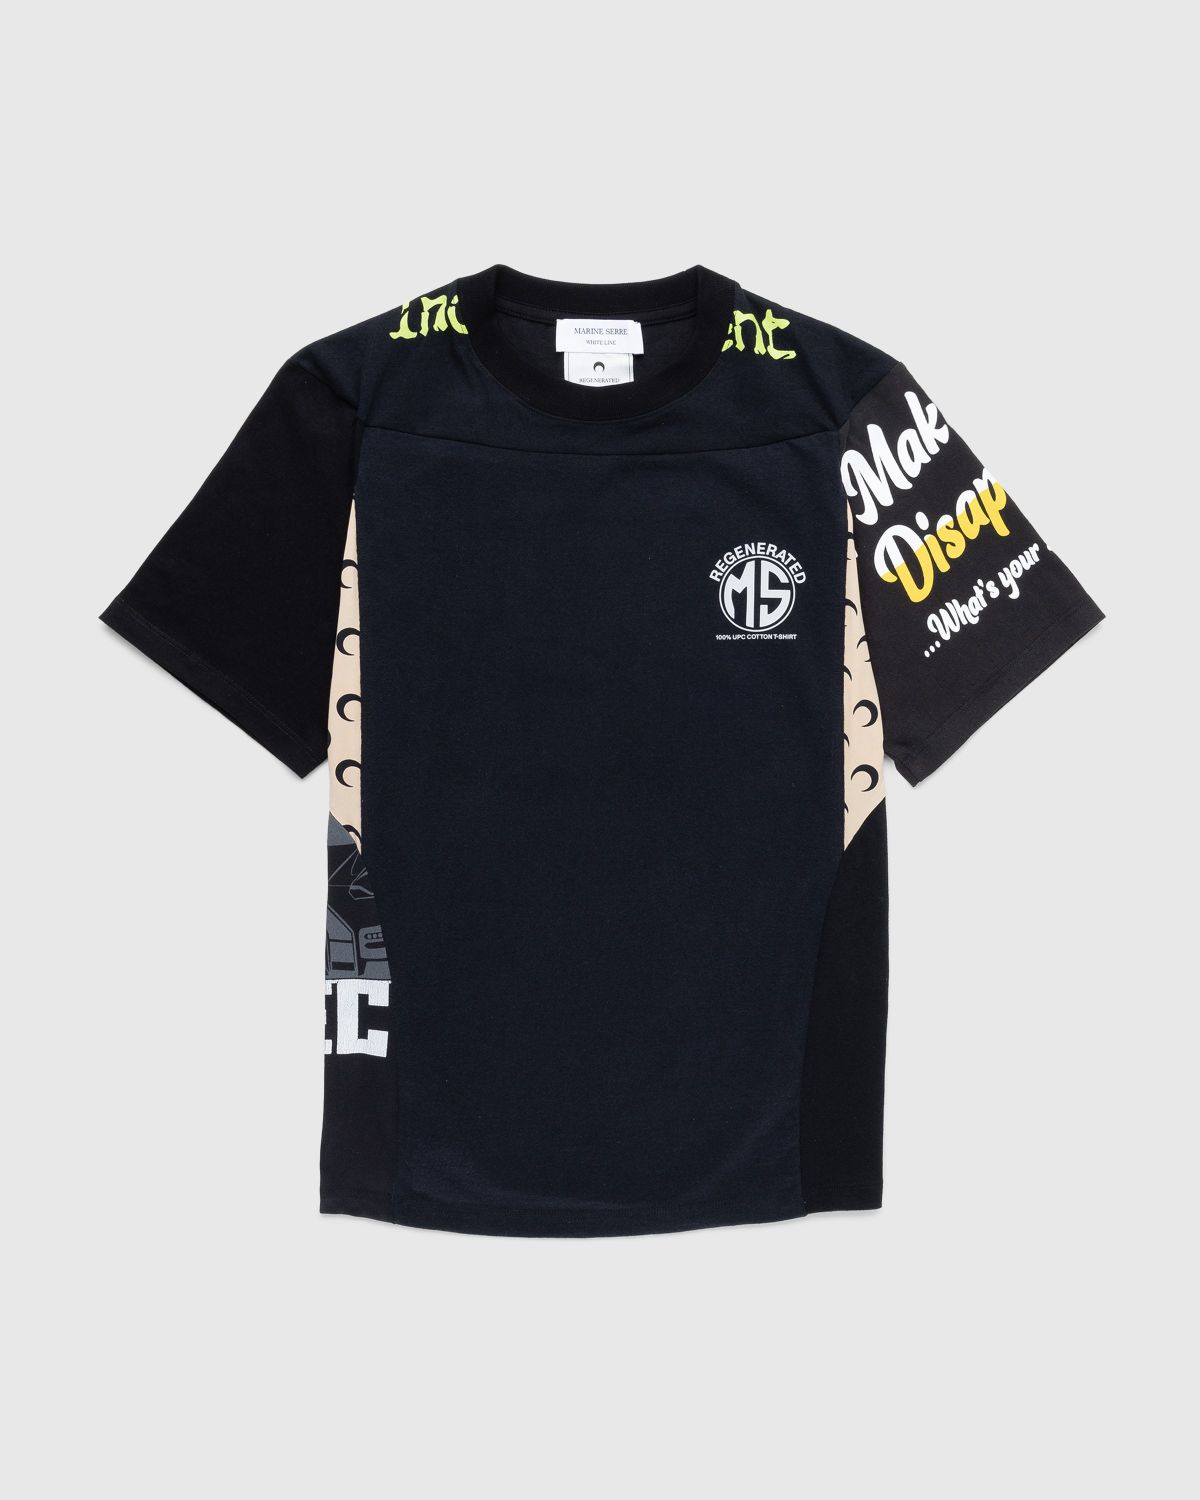 Marine Serre – Regenerated Graphic T-Shirt Black - T-shirts - Black - Image 1